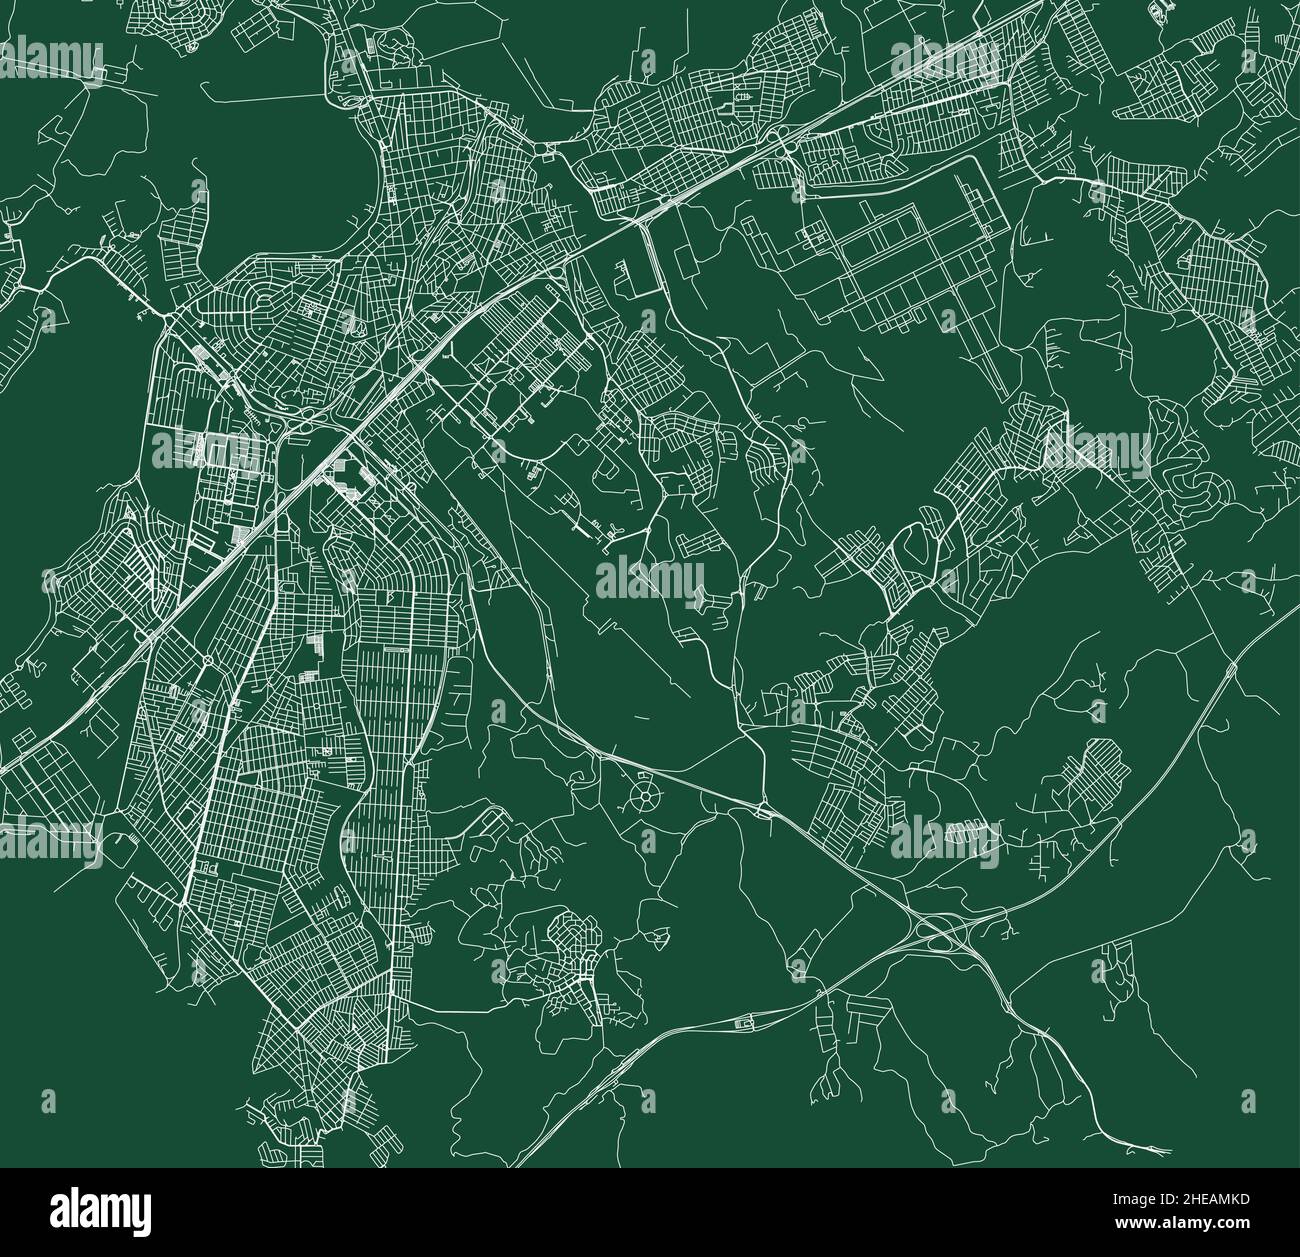 Sao Jose dos Campos city Brazil municipality vector map. Green street map, municipality area, white lines. Urban skyline panorama for tourism. Stock Vector